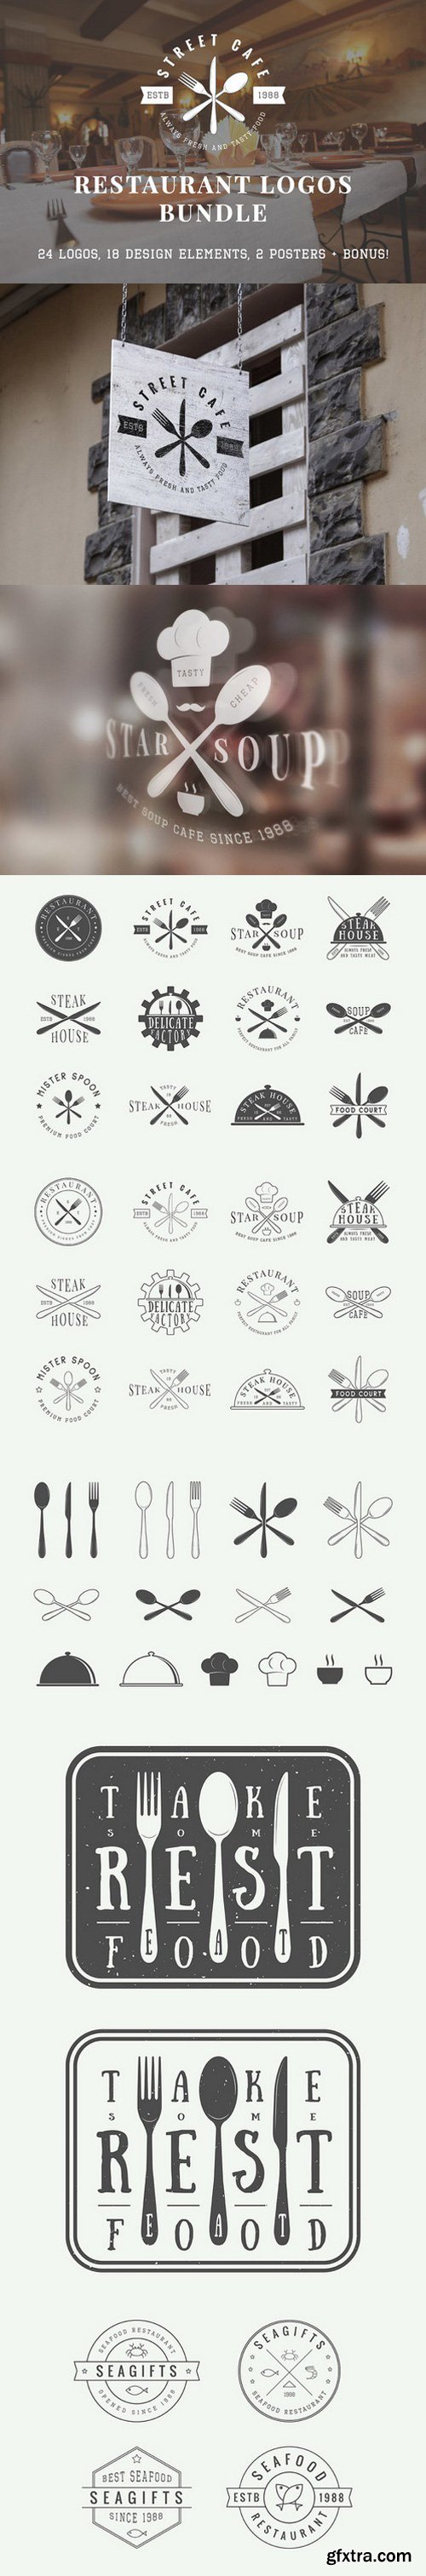 Set of vintage restaurant logos